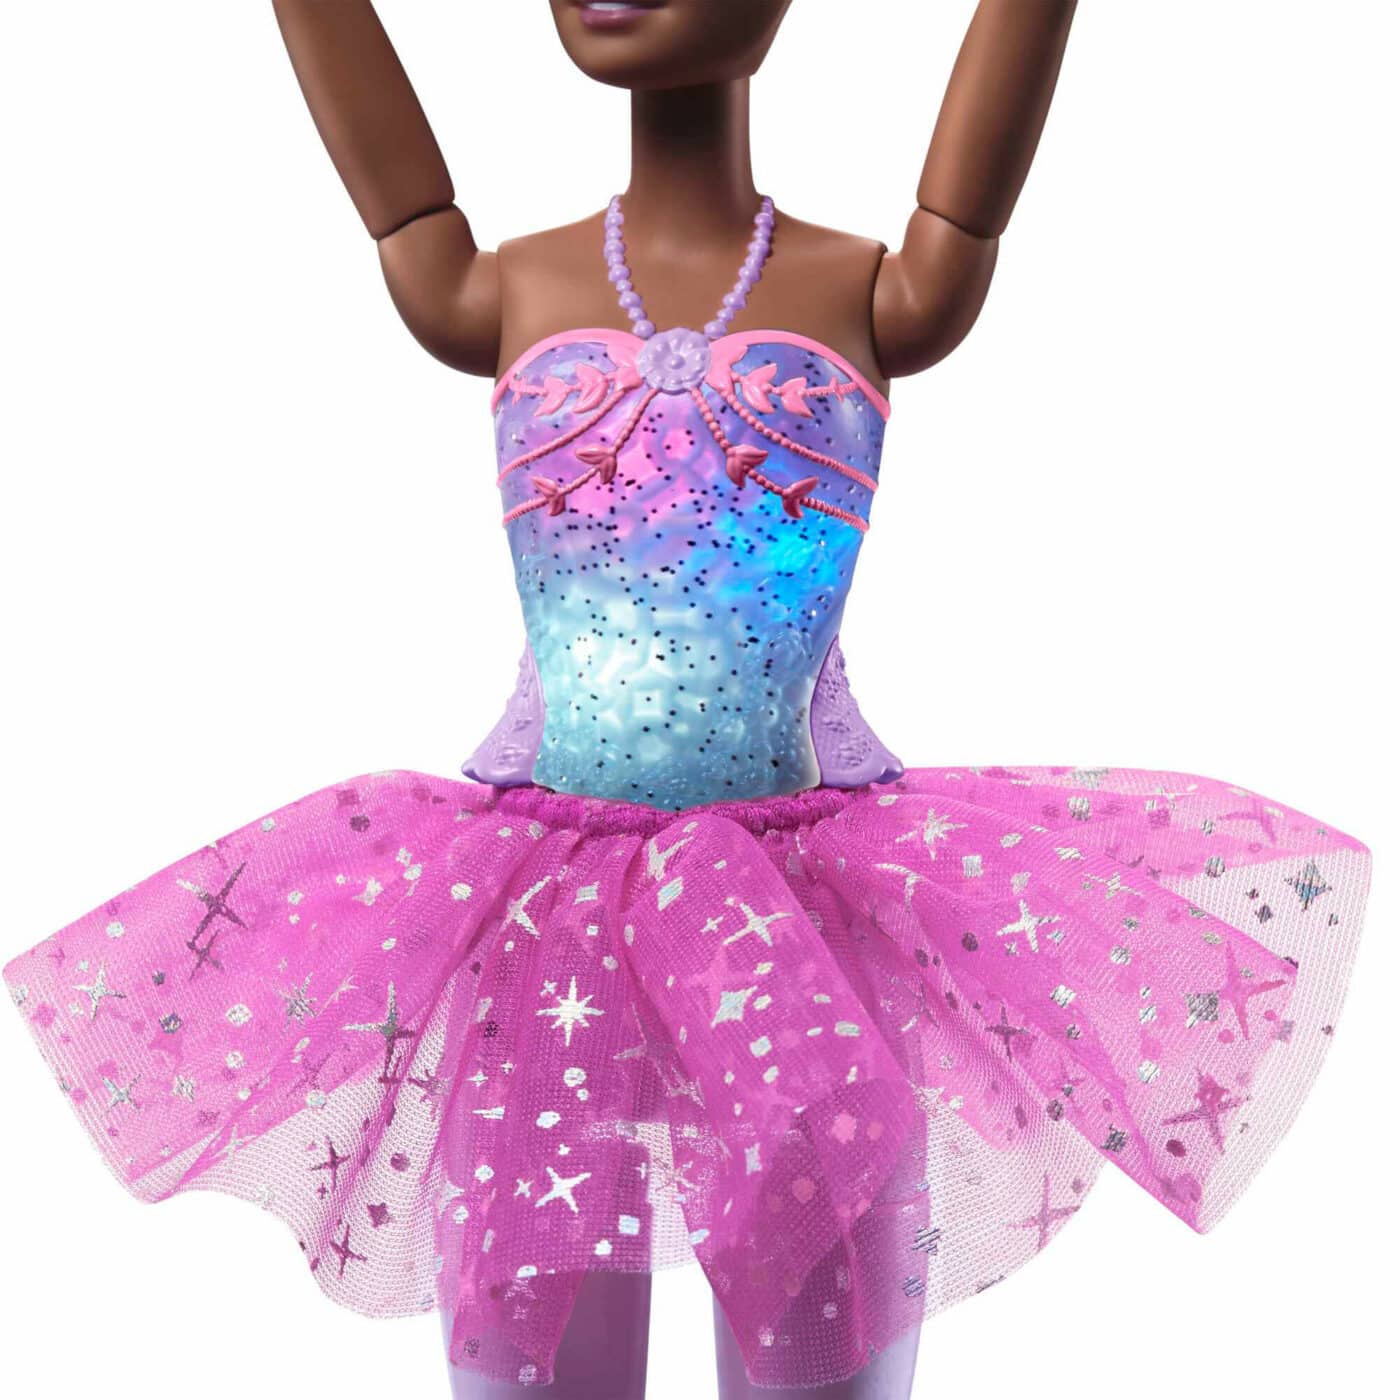 Barbie Dreamtopia - Twinkle Light Ballerina Doll